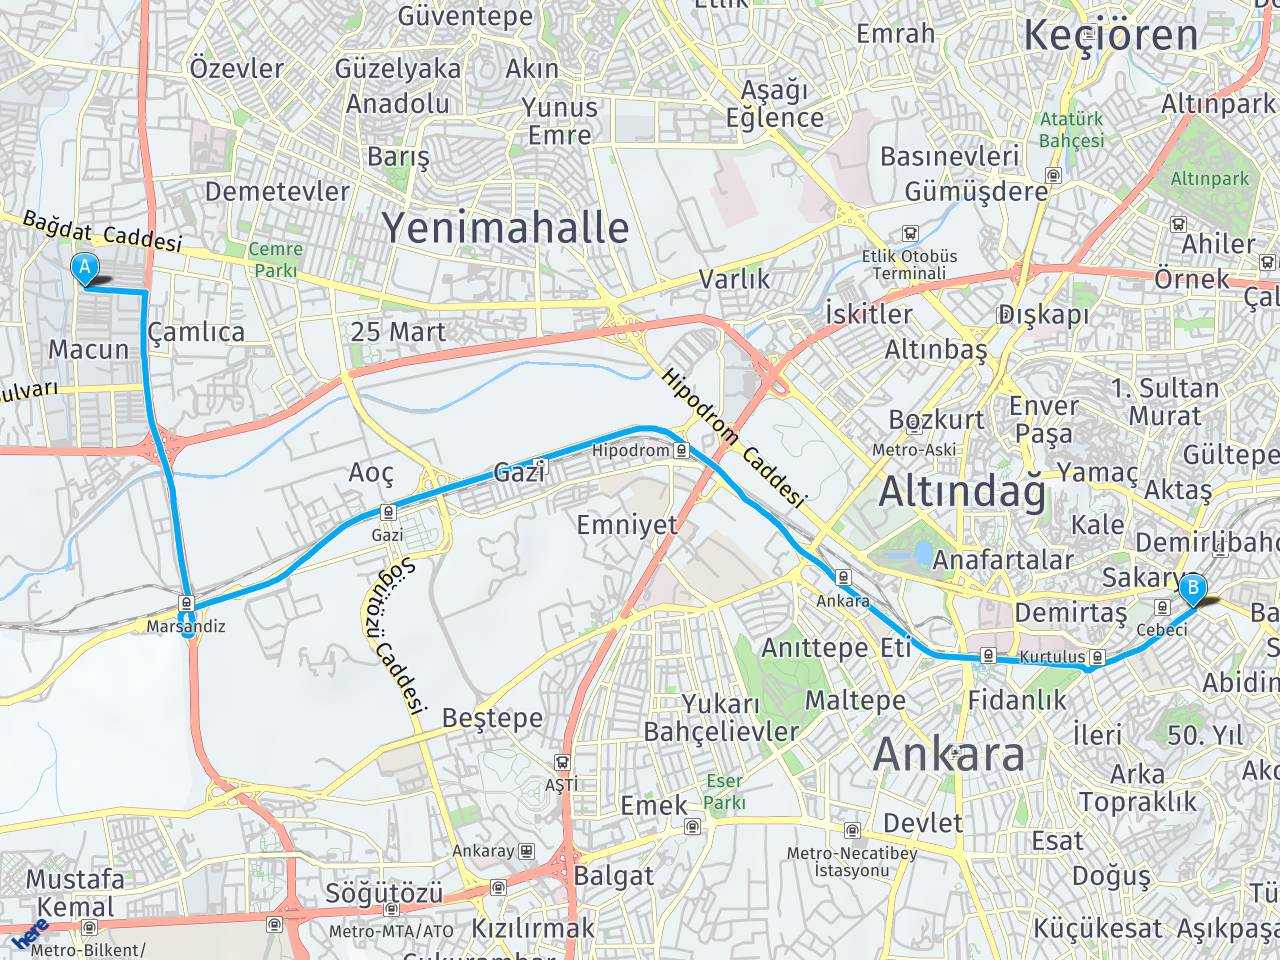 Ankara Gimat Ankara Cebecİ Dİkİmevİ haritası